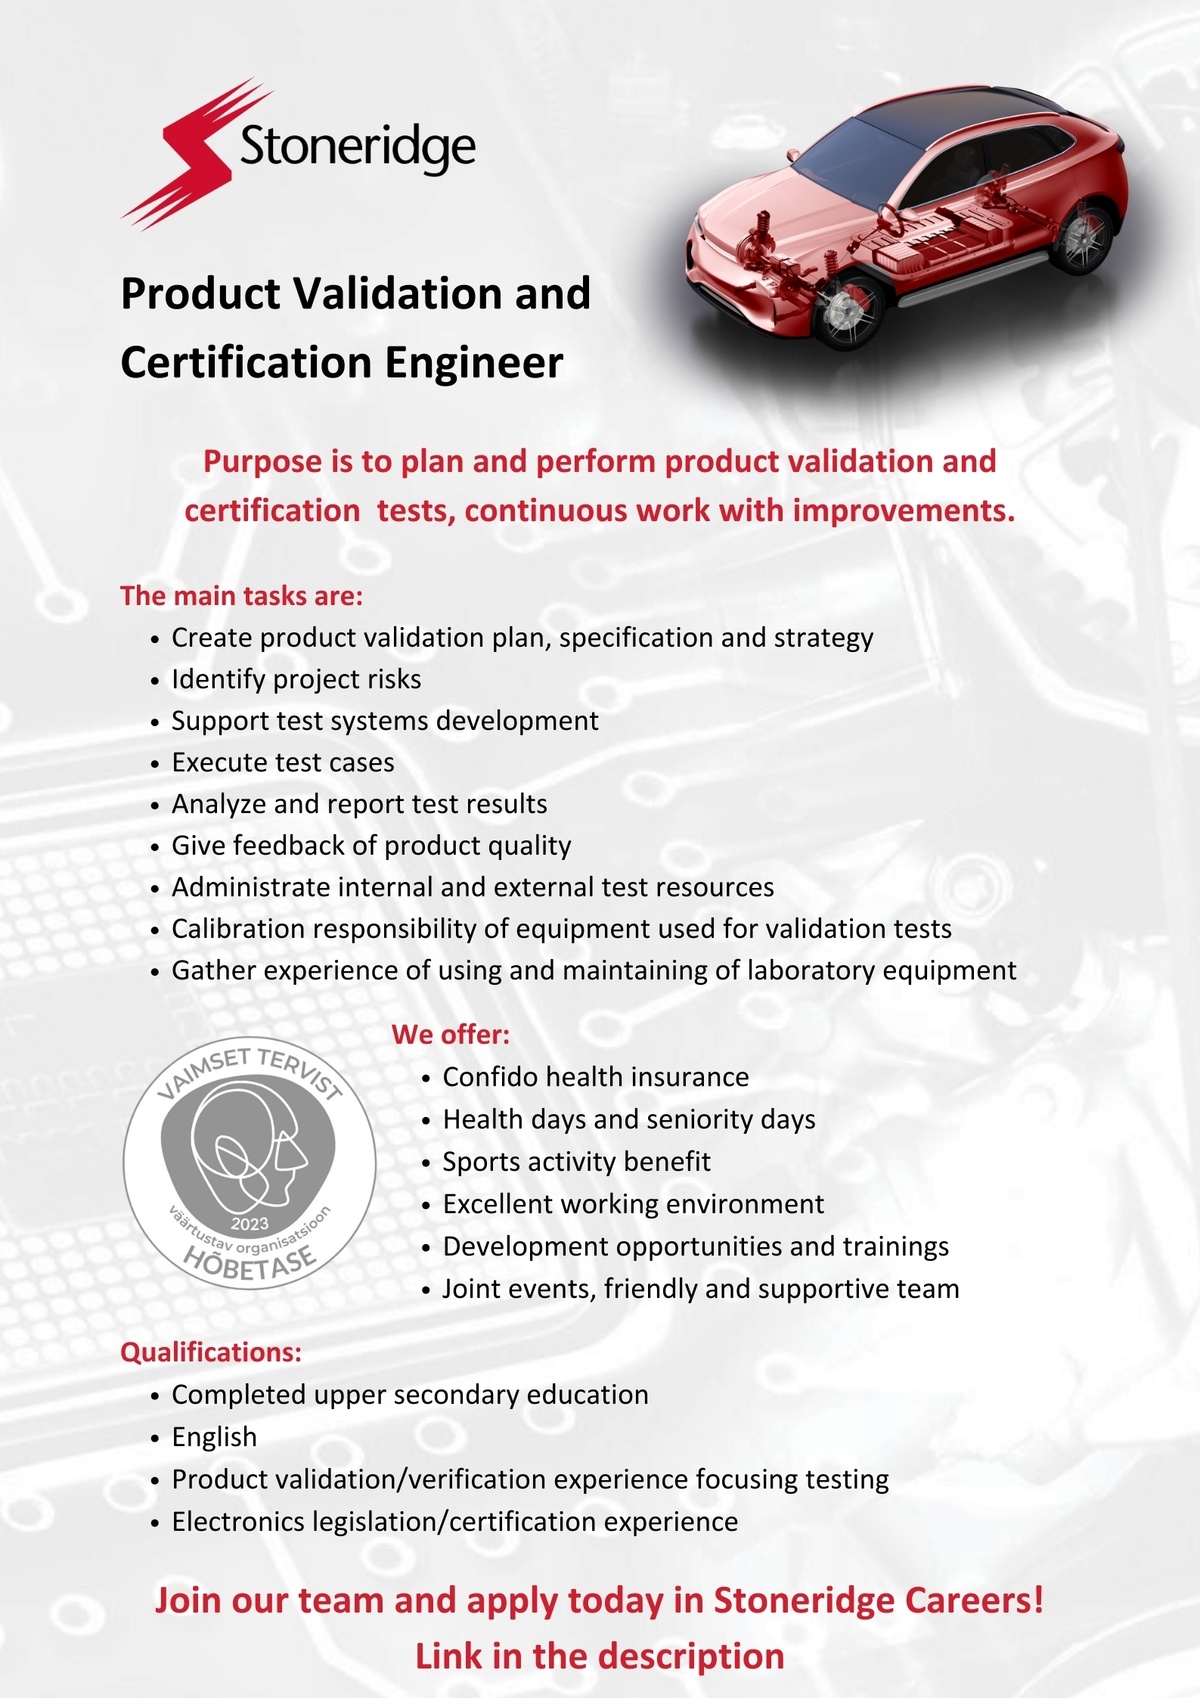 Stoneridge Electronics AS Product Validation and Certification Engineer